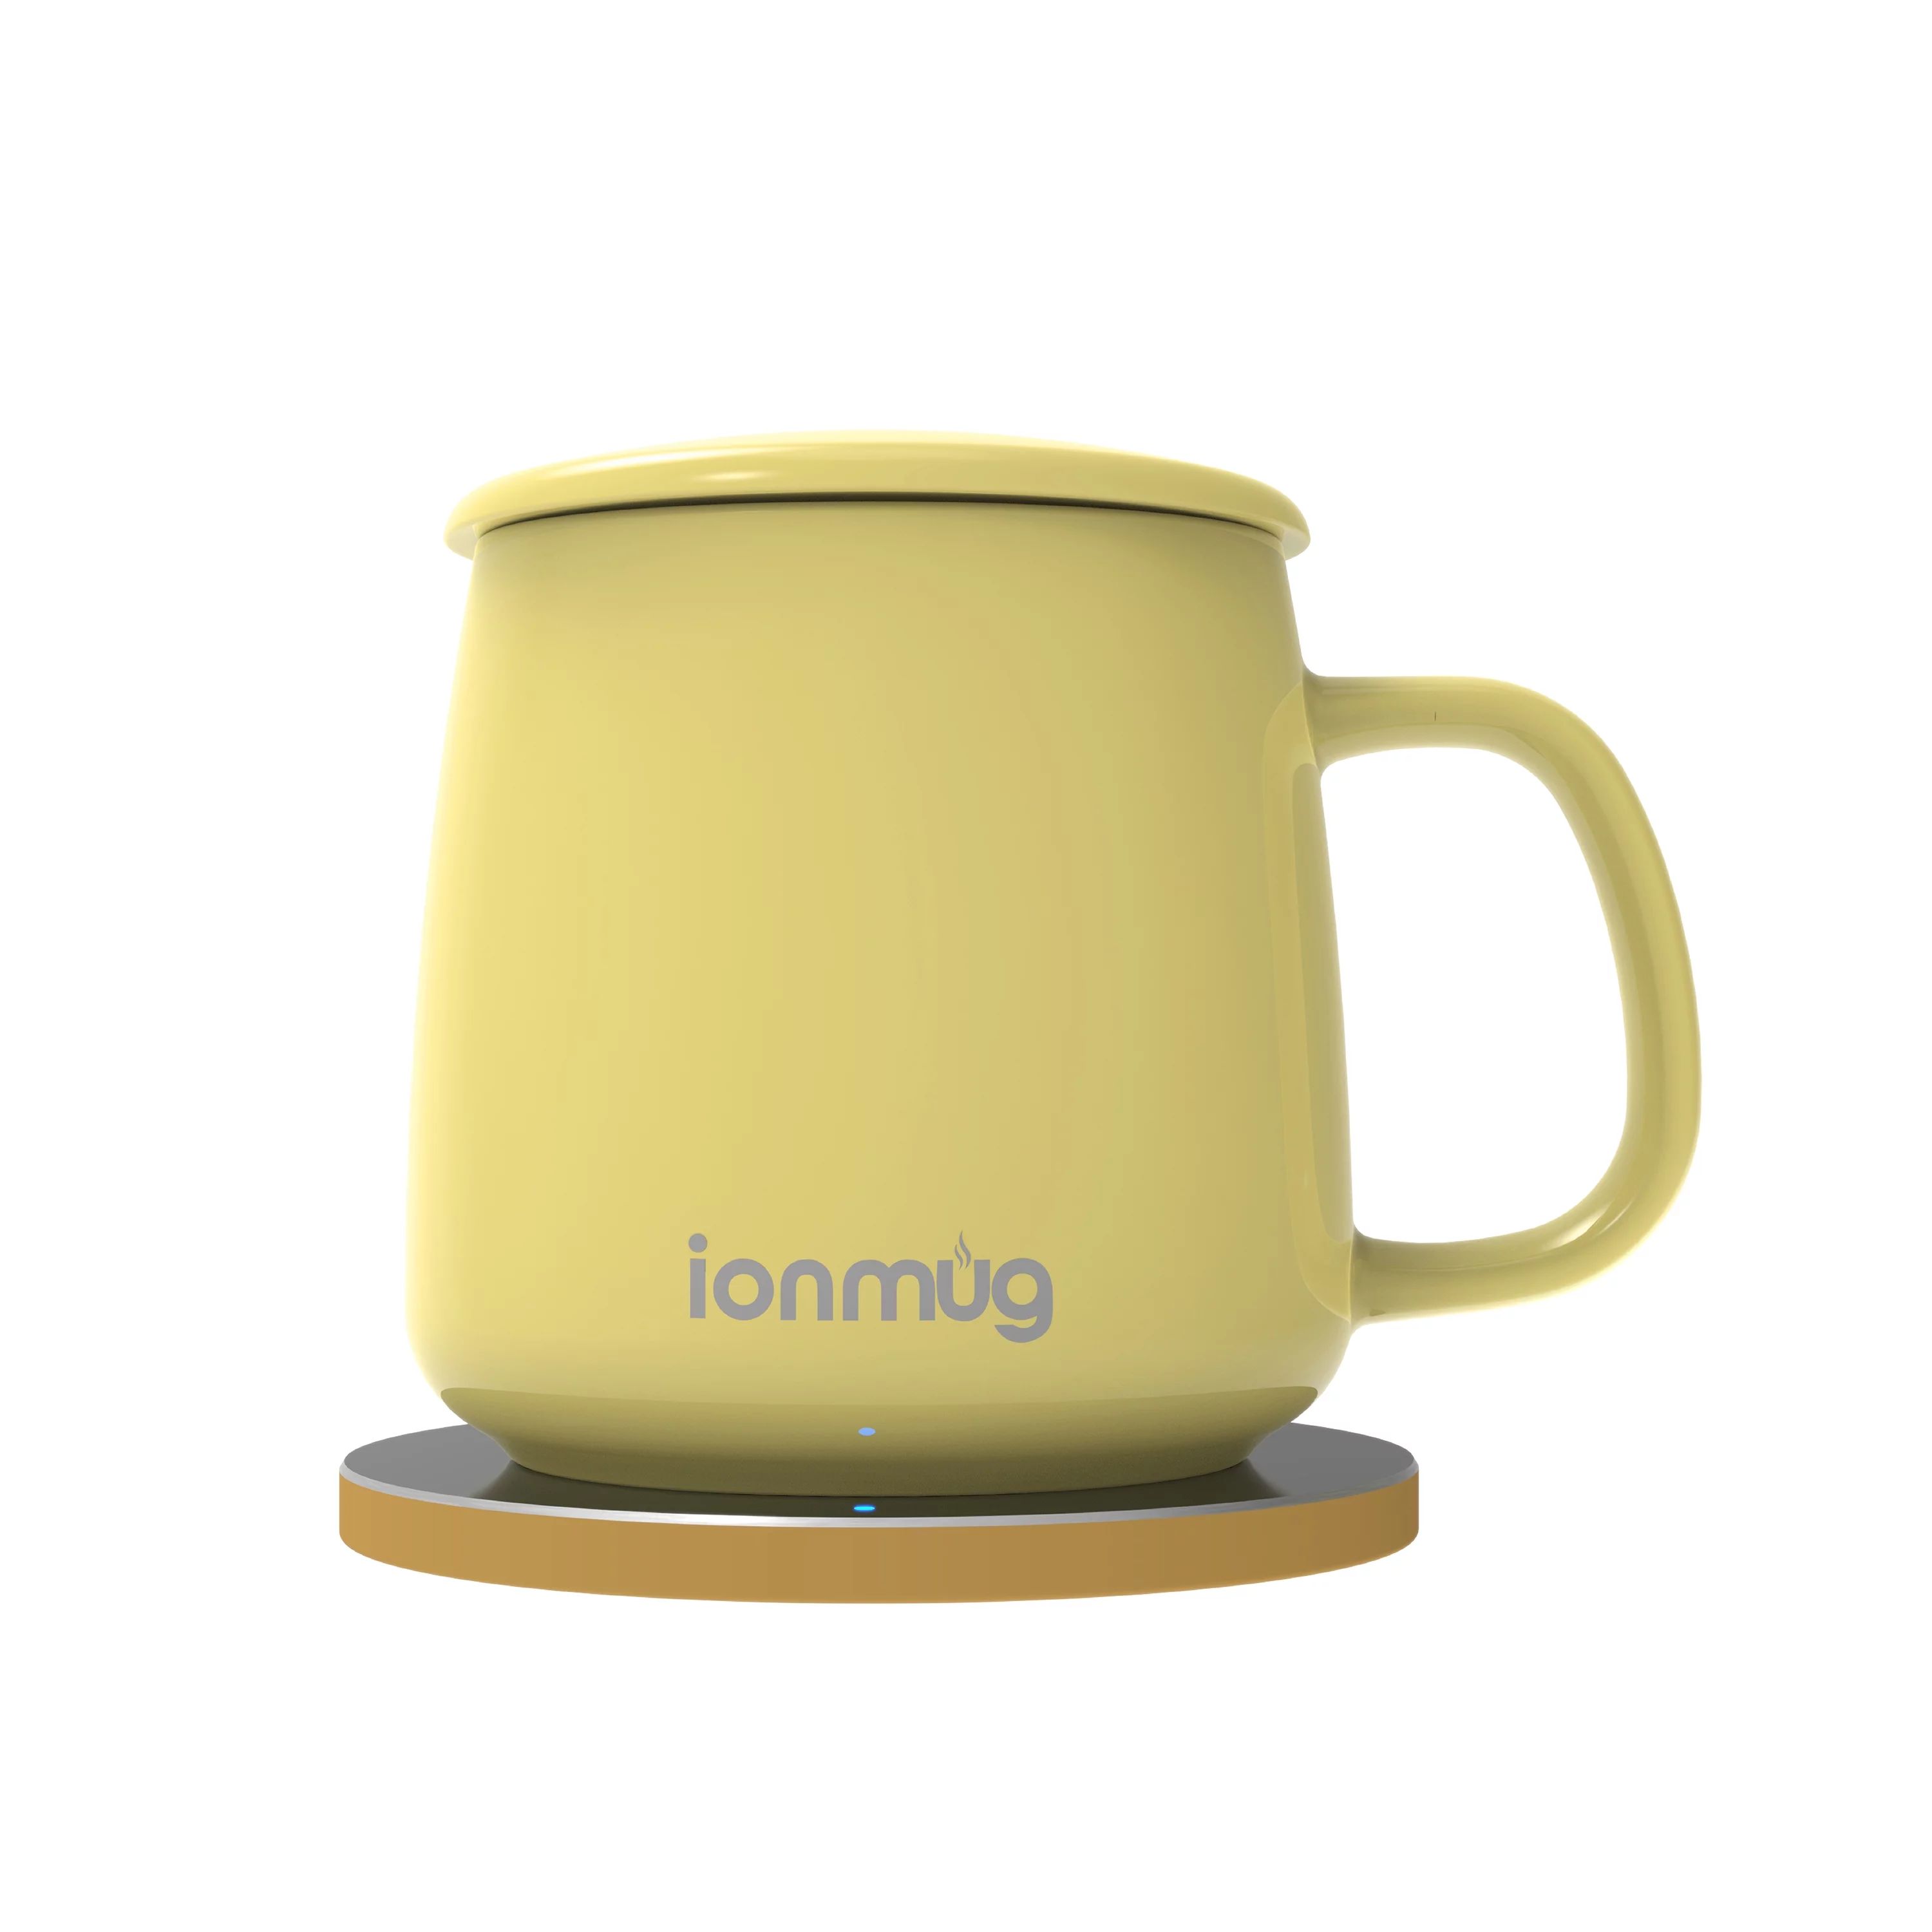 ionMug and Charging Coaster – 12.8oz Heated Ceramic Coffee Mug with Wireless Charging Coaster | Walmart (US)